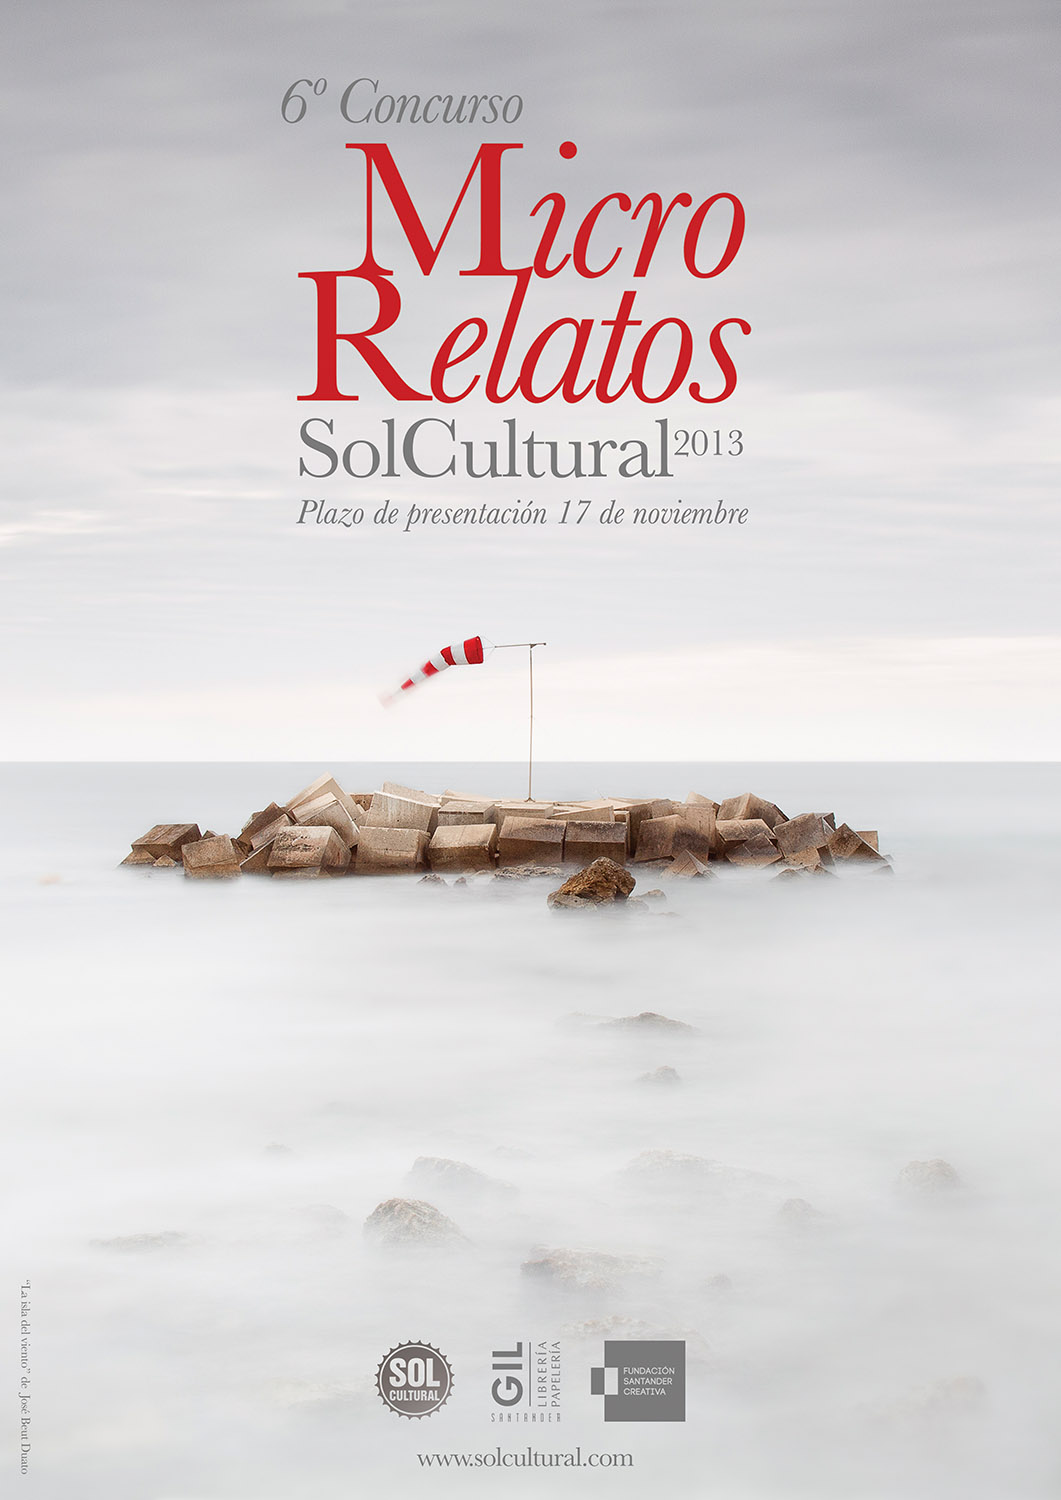 sol cultural - micro relatos 2013 - beusual